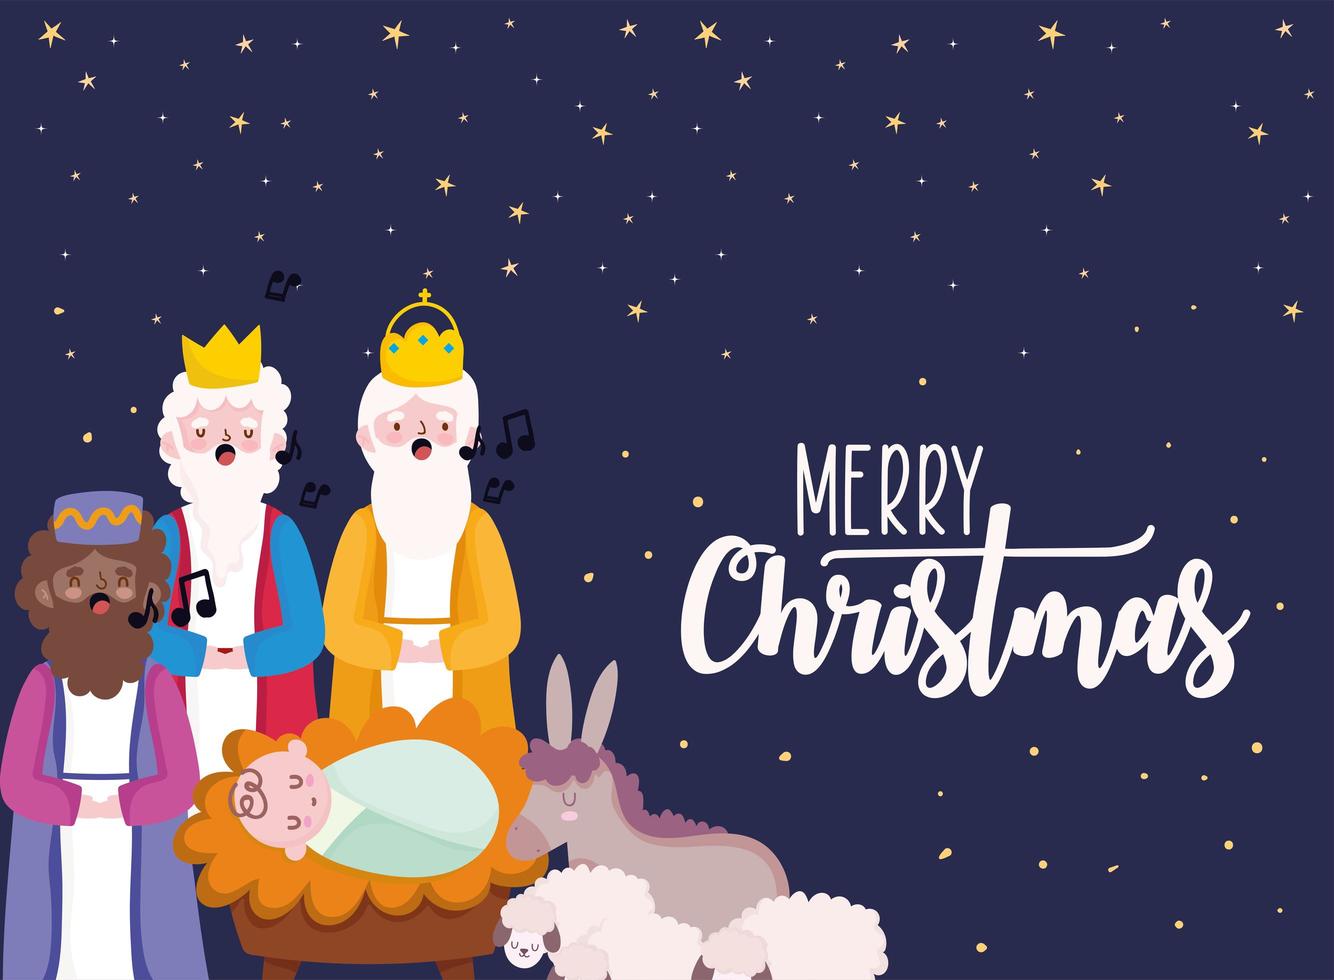 nativity, manger wise kings baby donkey and sheep card cartoon vector